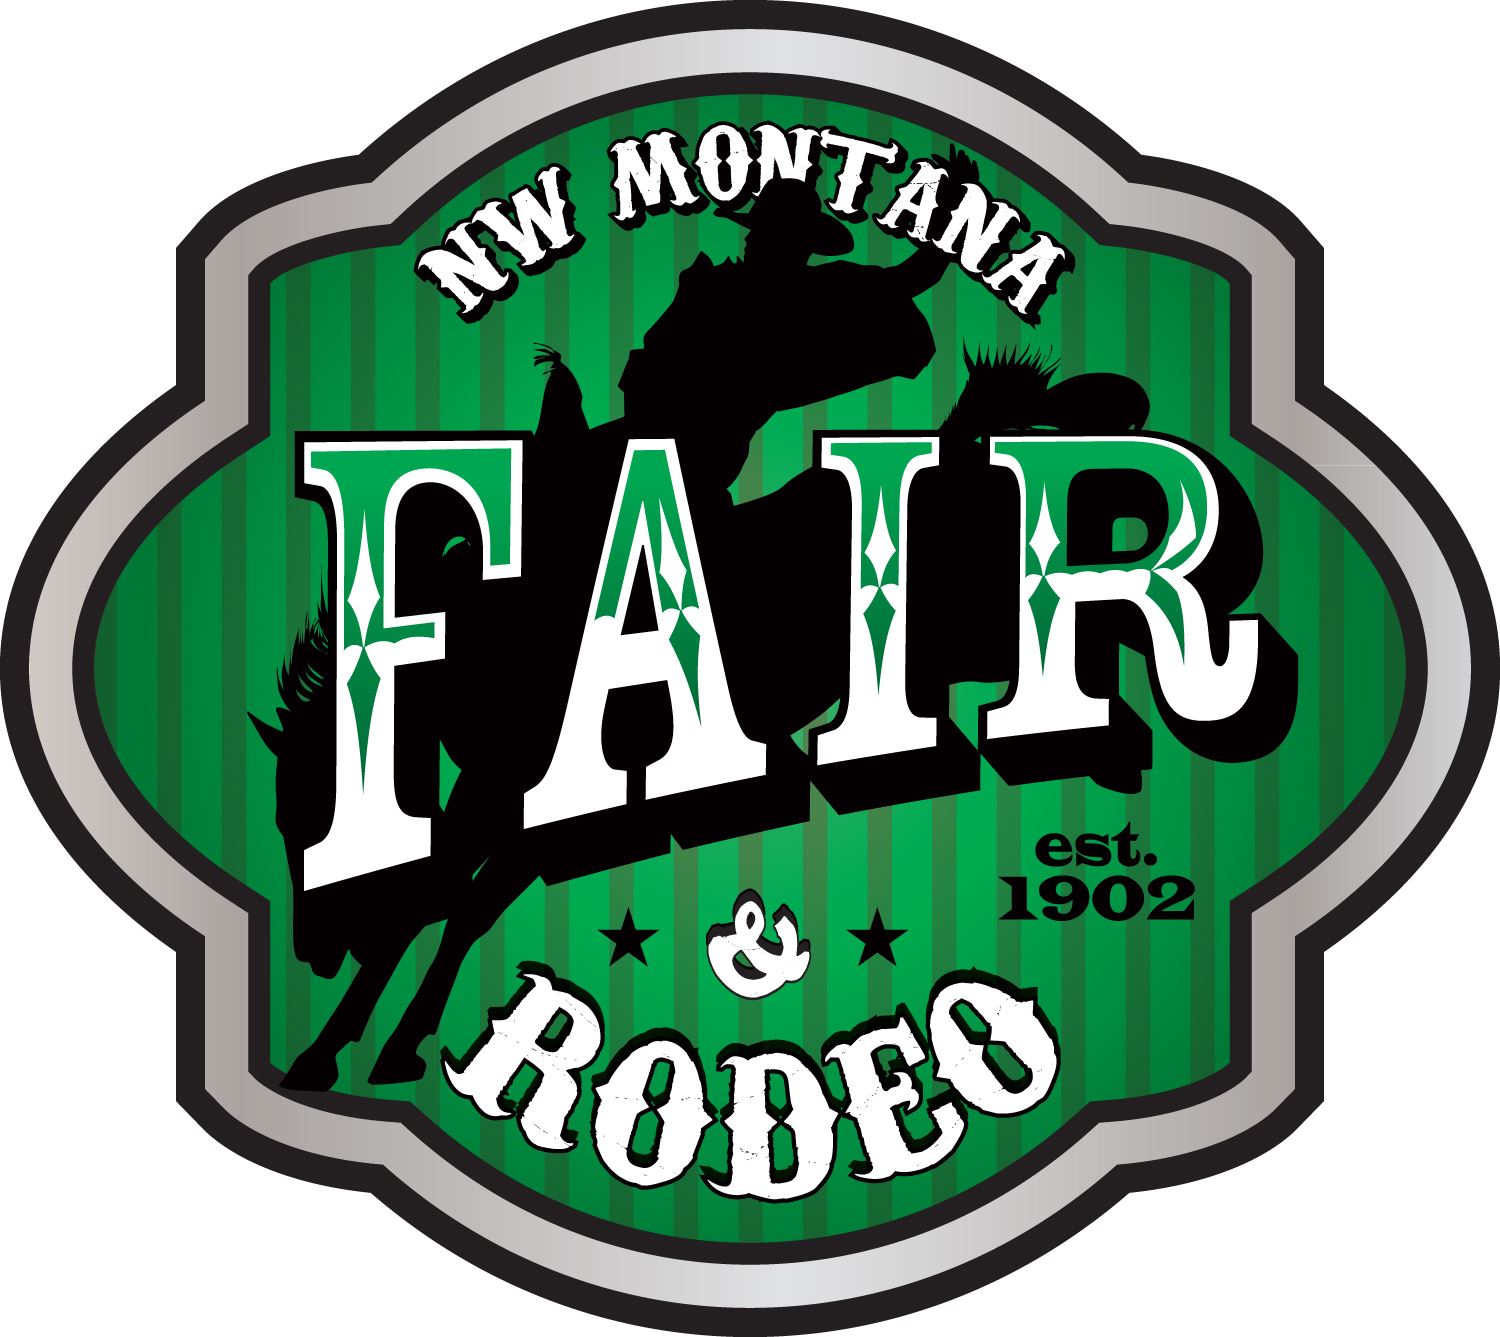 Northwest Montana Fair